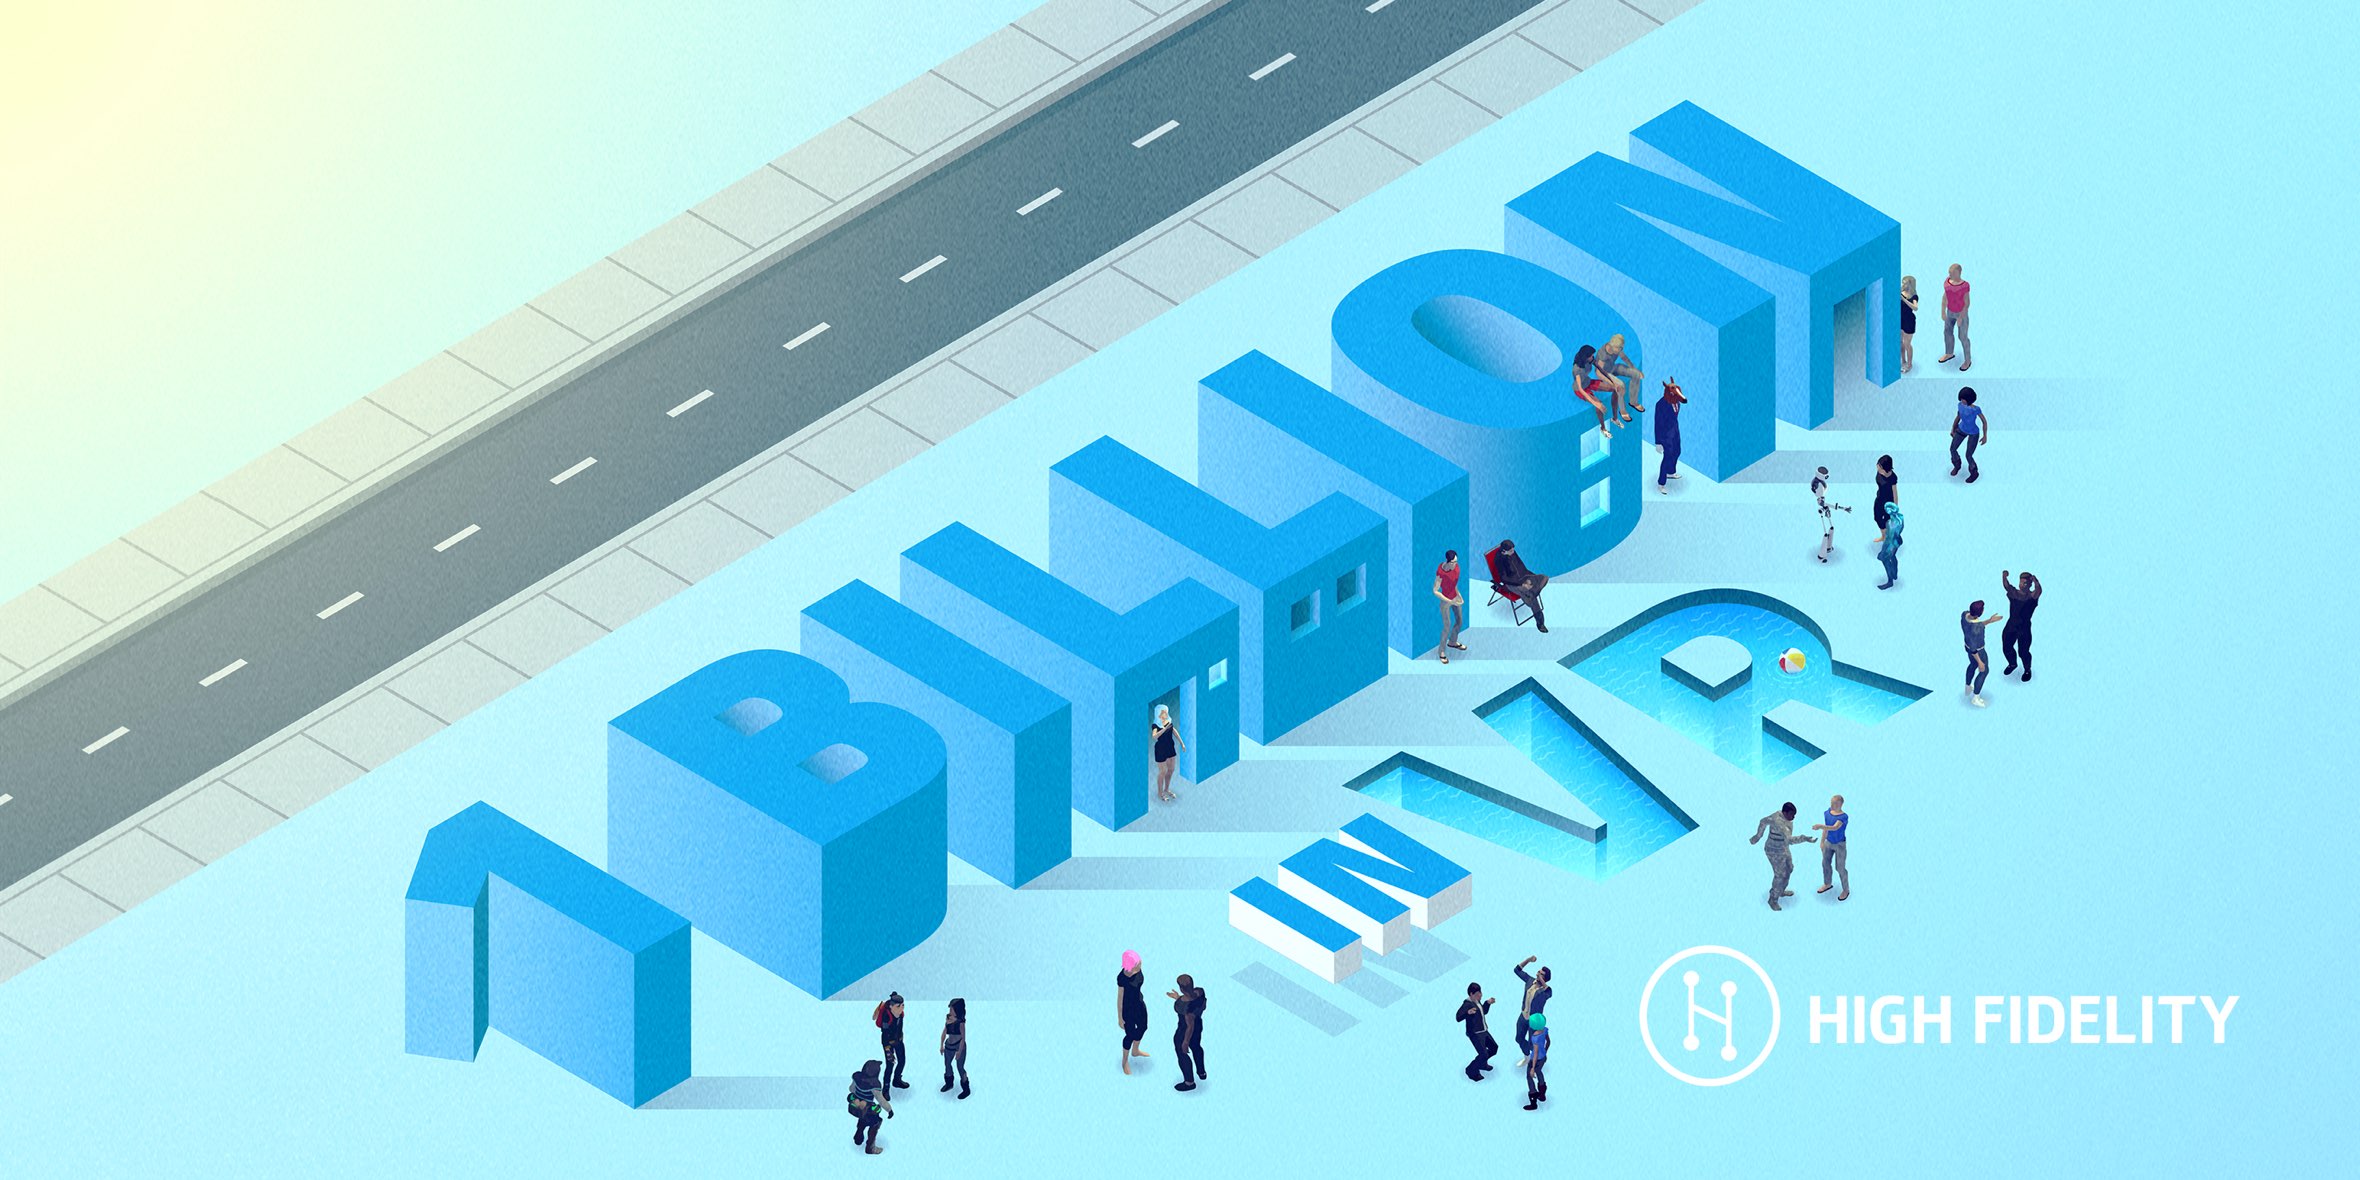 Event branding for '1 Billion in VR' load test event in High Fidelity